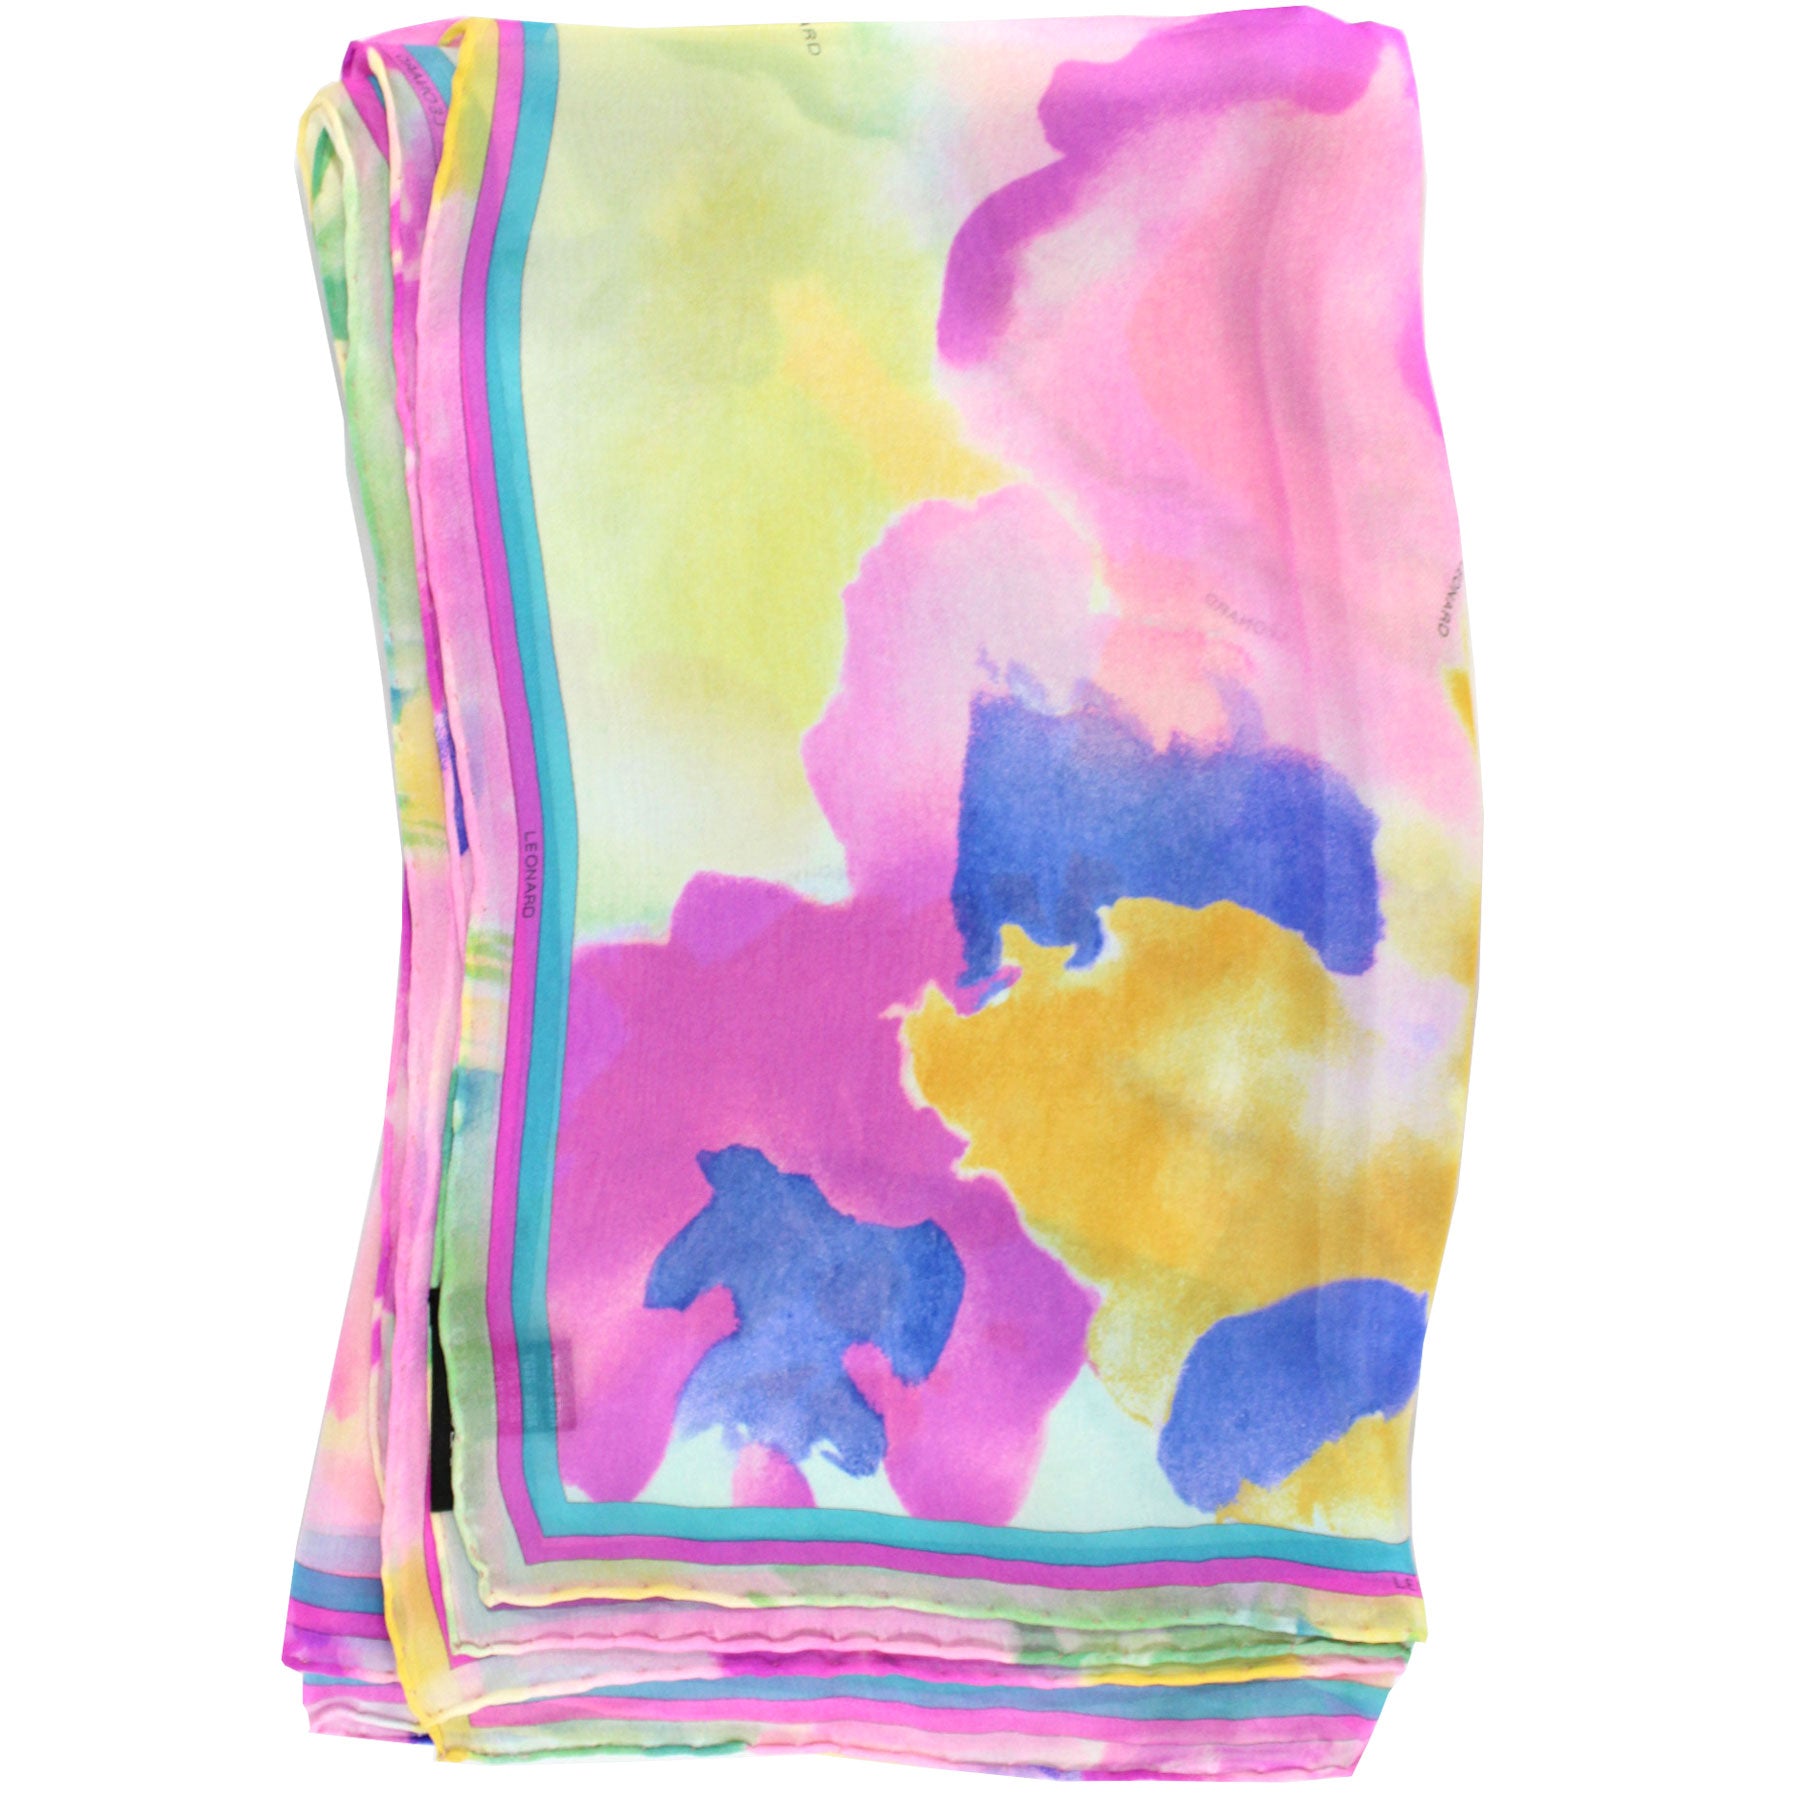 Leonard Paris Scarf Pink Green Design - Large 55 Inch Square Chiffon Silk Wrap